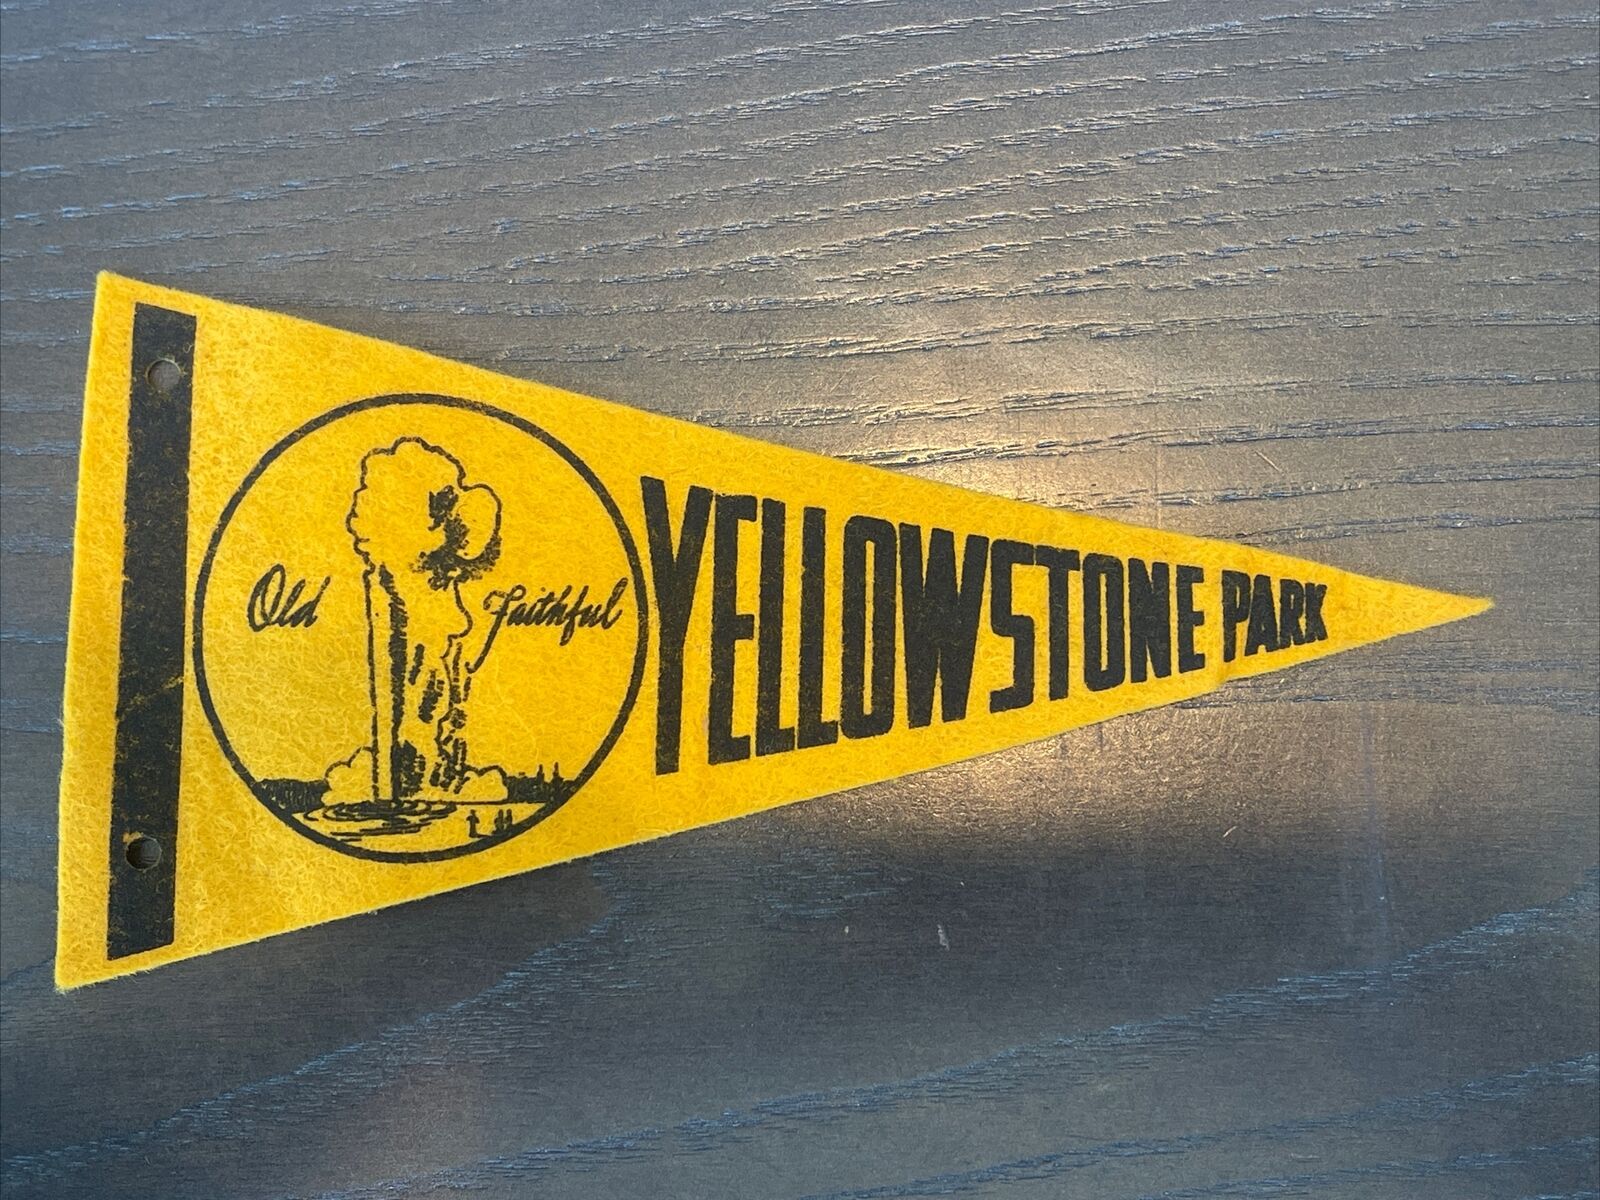 Original vintage 1930s or 40s era old faithful Yellowstone park felt pennant